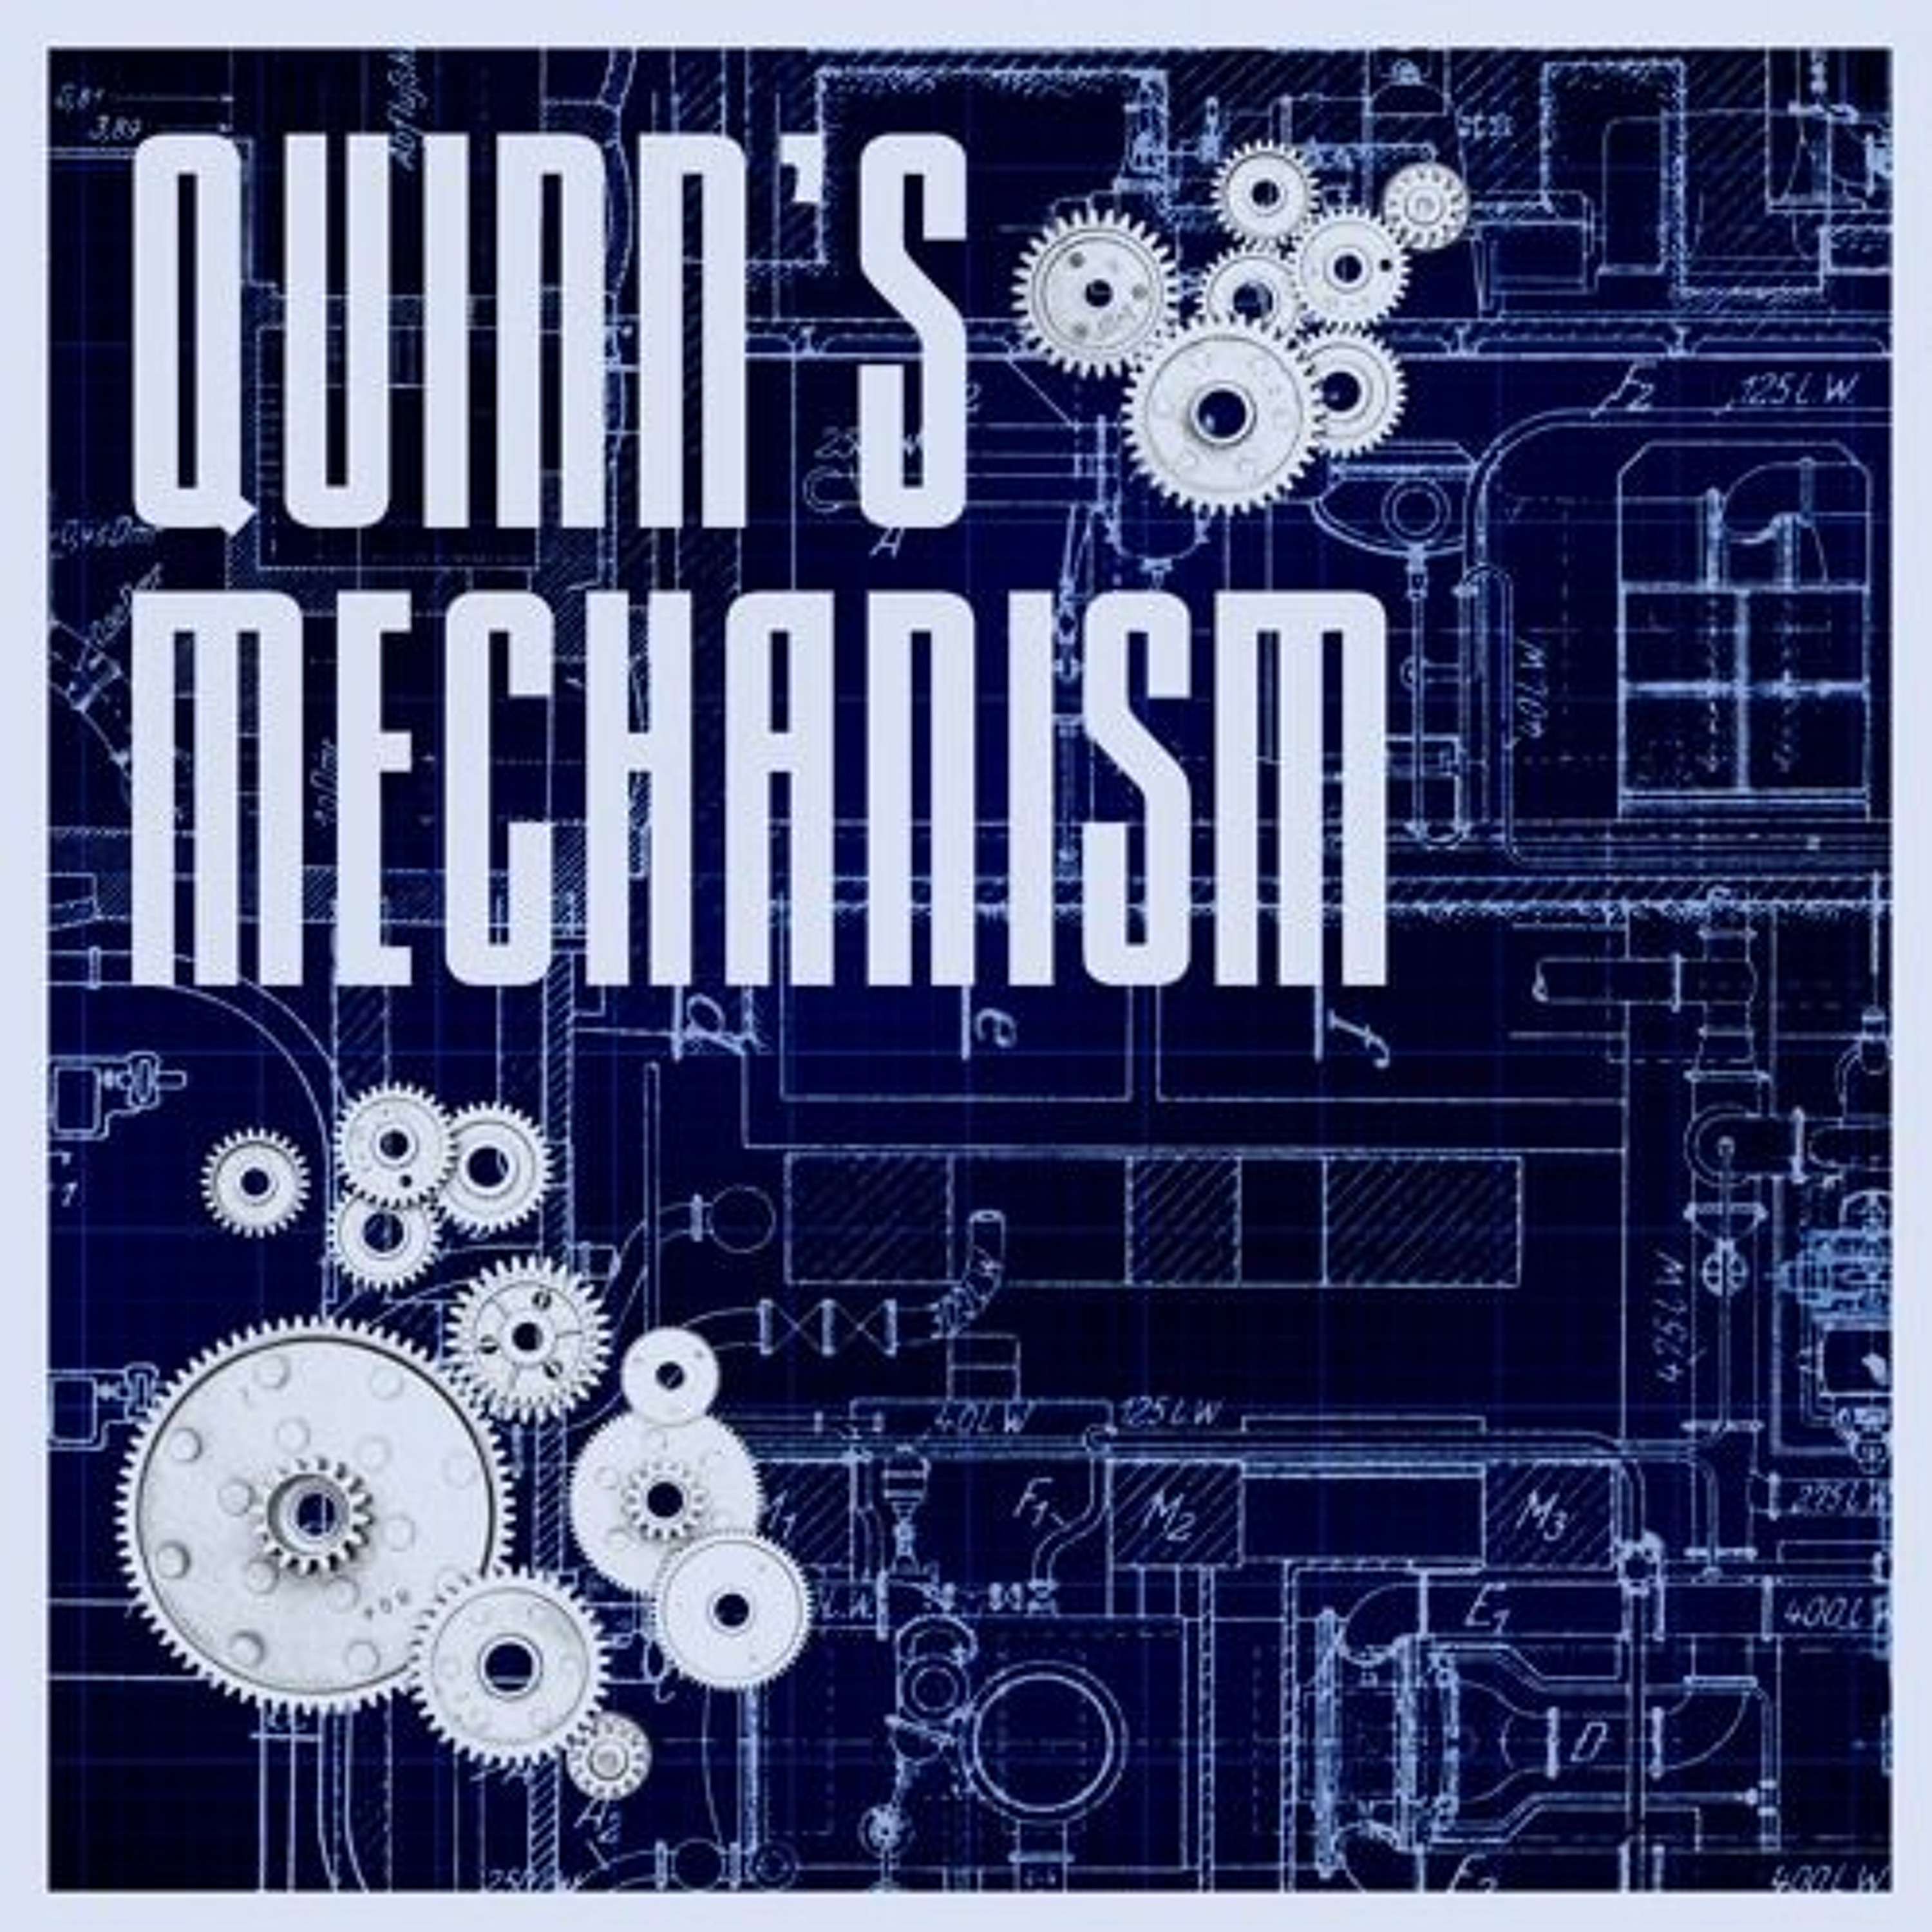 Quinn's Mechanism - Third Act, The First Component